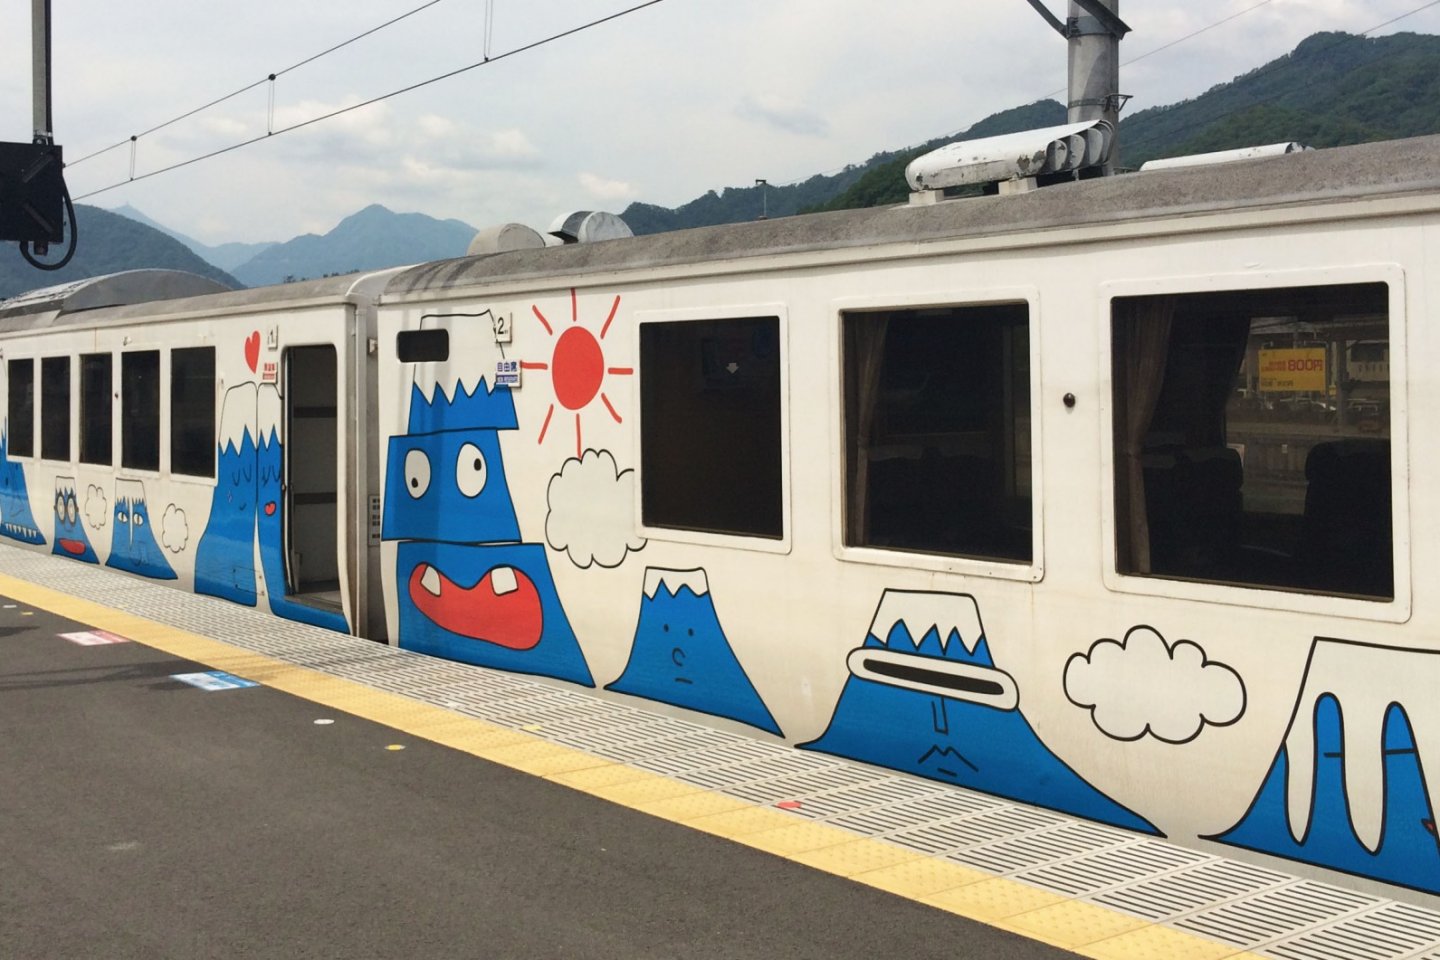 The Fujisan Express is Japan's Mount Fuji-themed train.